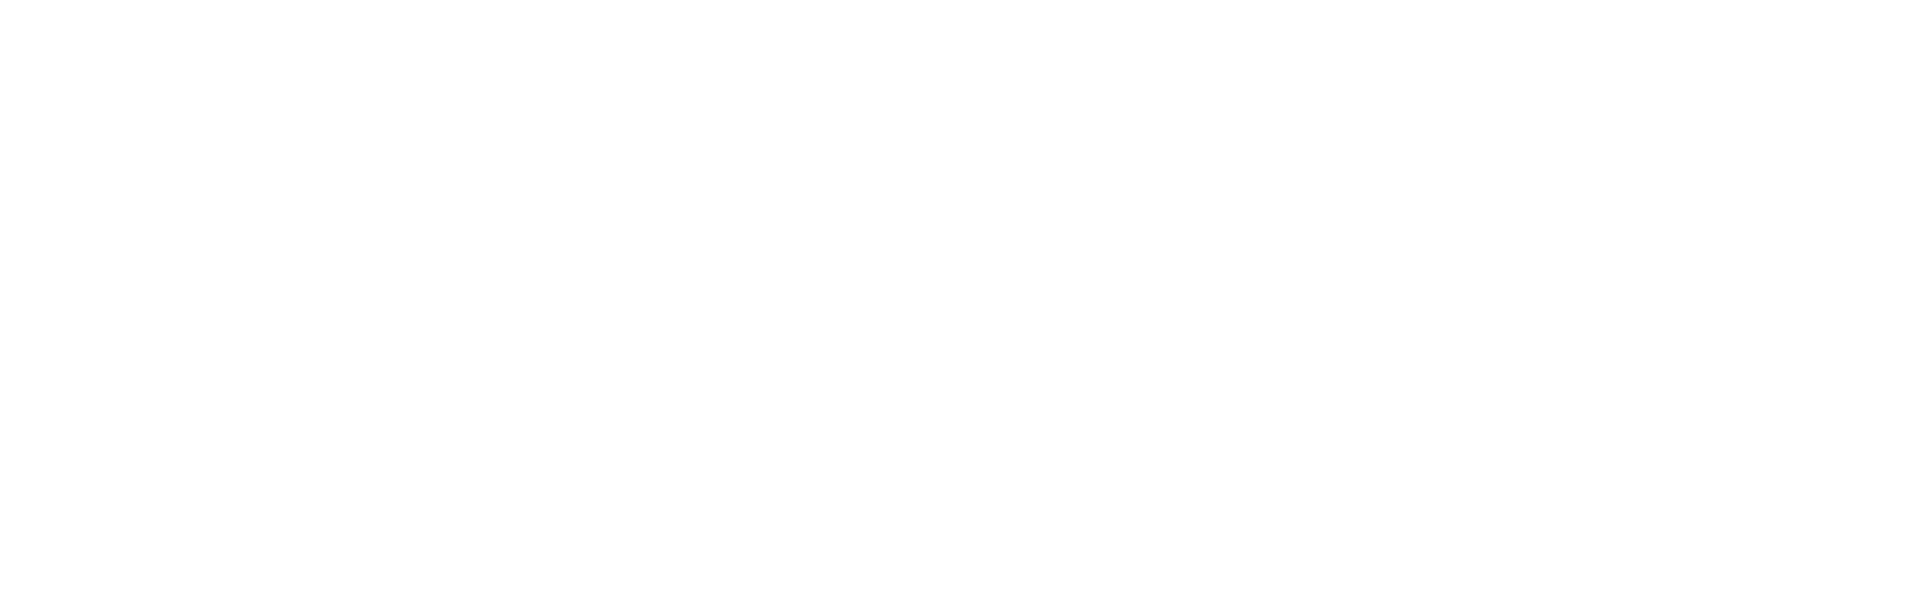 Platinum Trusted Service Award 2023 Whiteout Landscape